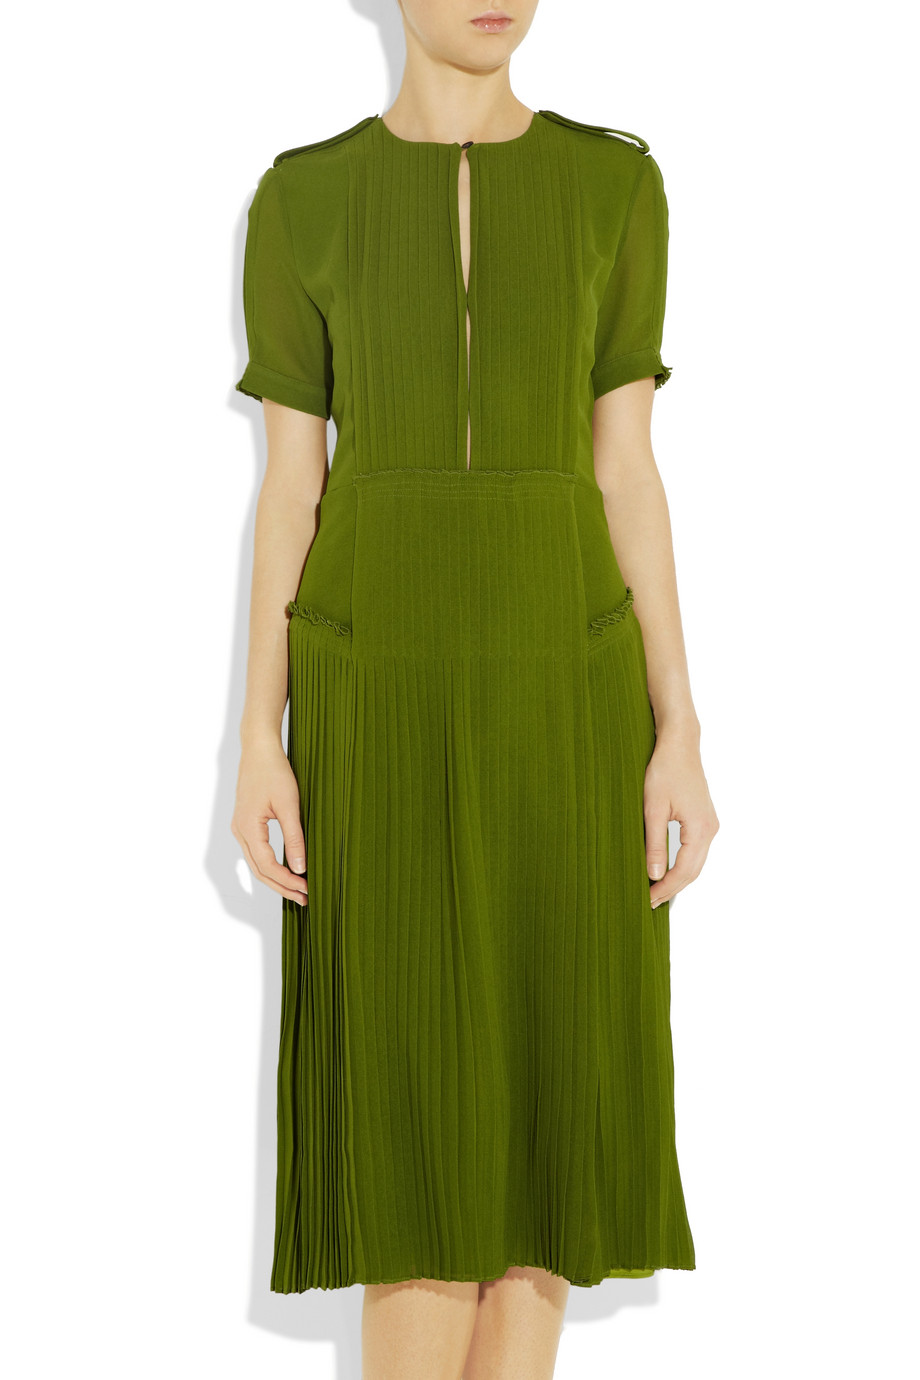 Lyst - Burberry prorsum Kinga Silk-Georgette Dress in Green